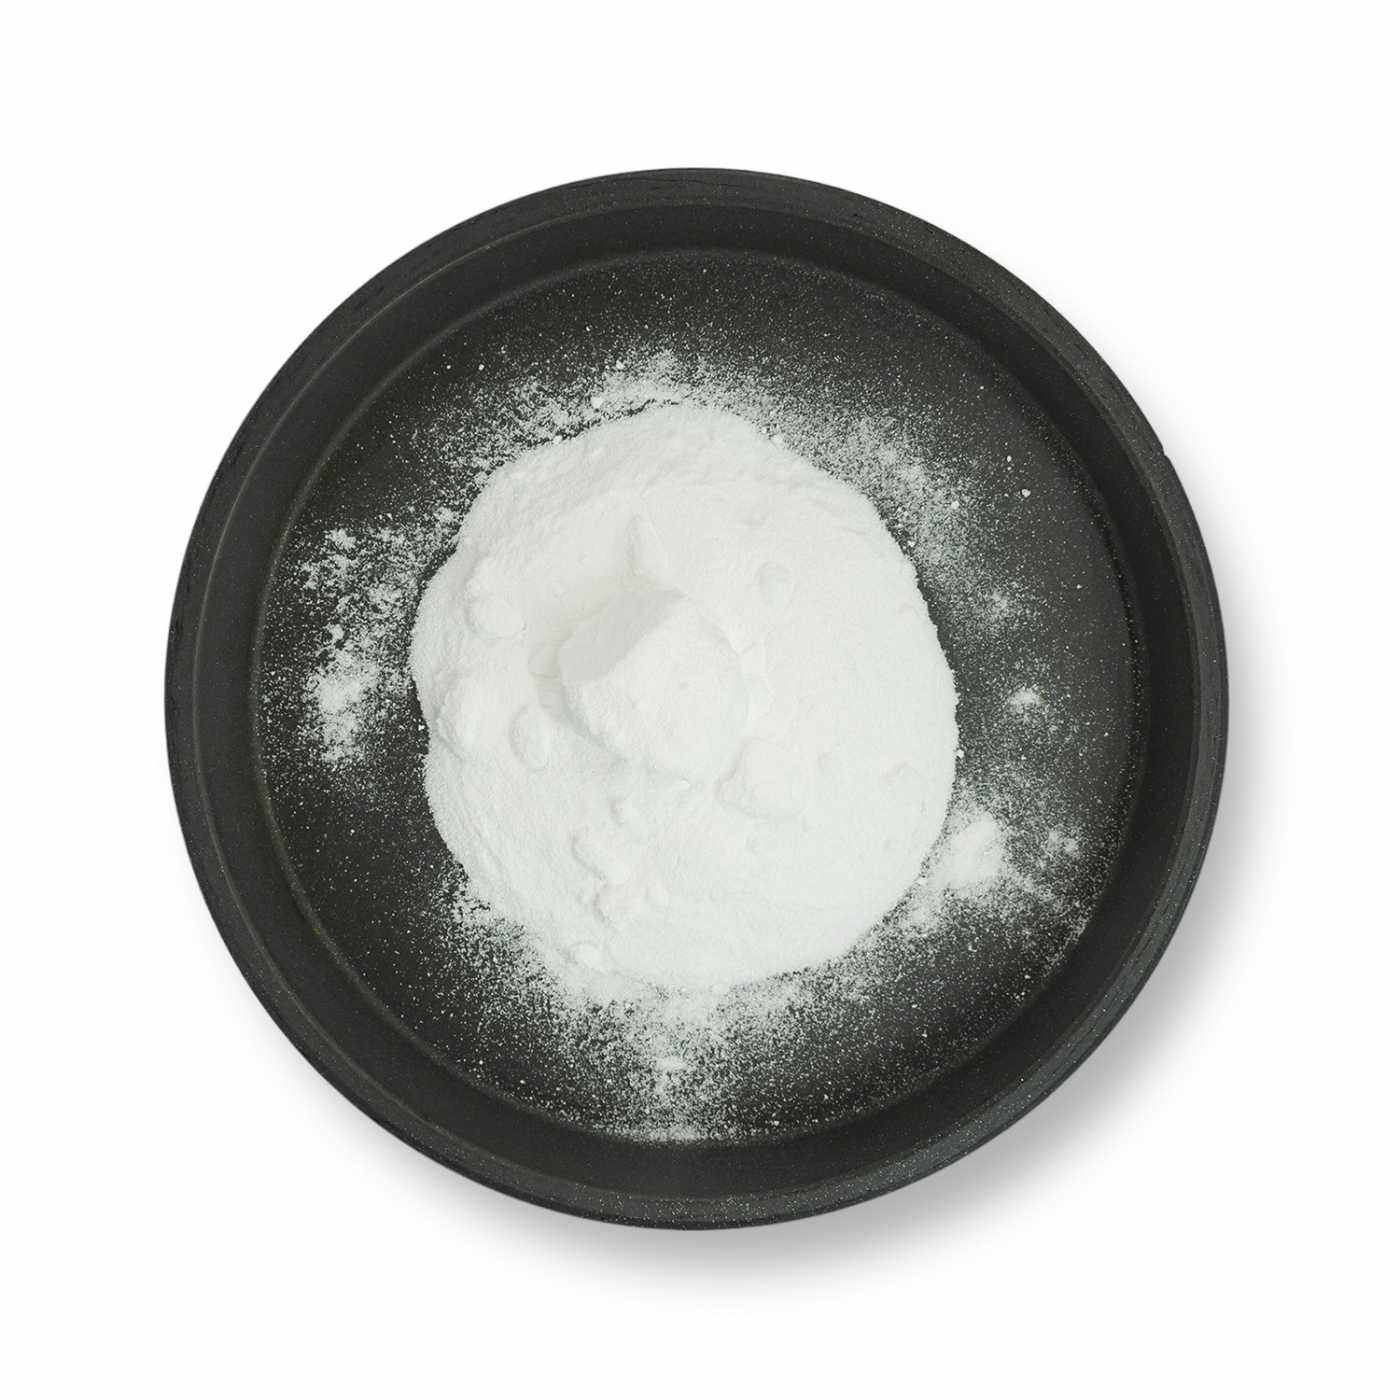 Sodium Lauryl Sulfoacetate (SLSA), 100 g